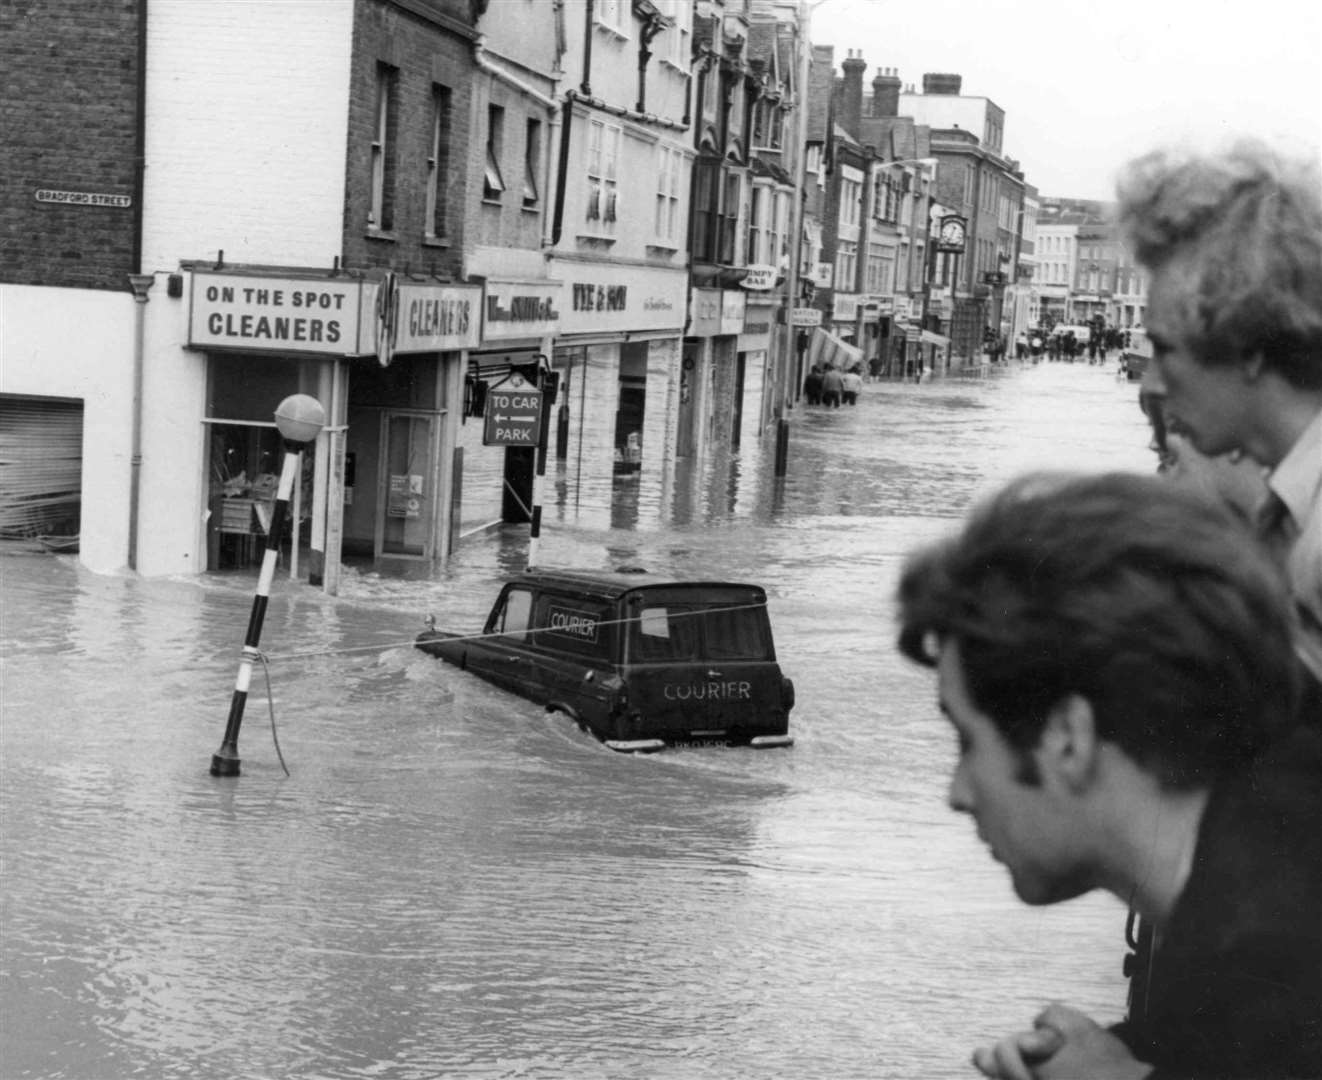 A delivery van stuck in the flood waters in Tonbridge in 1968